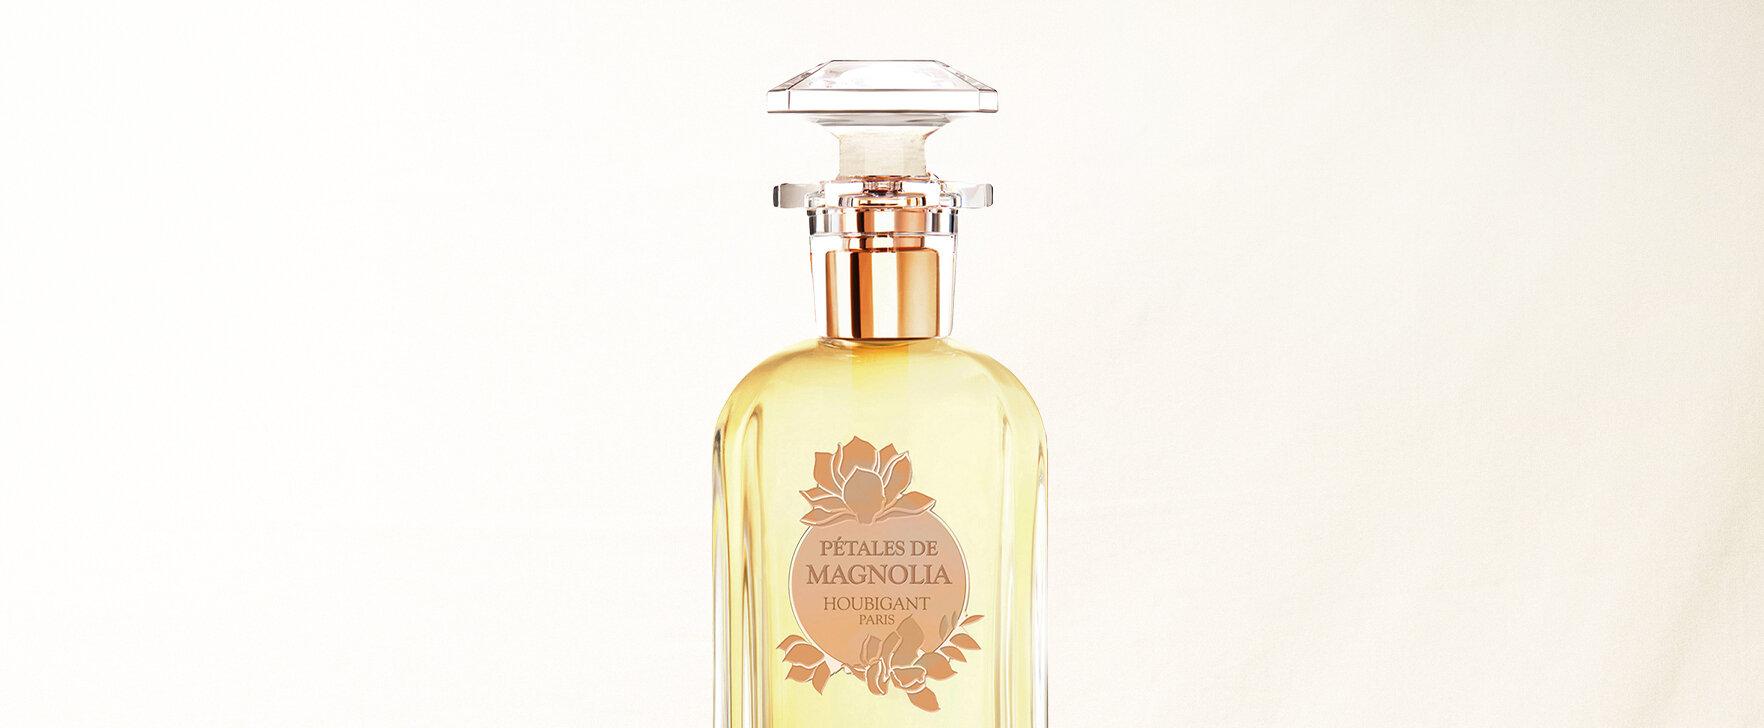 An Ode to the Beginning of Spring: The New Eau de Parfum Pétales de Magnolia by Houbigant